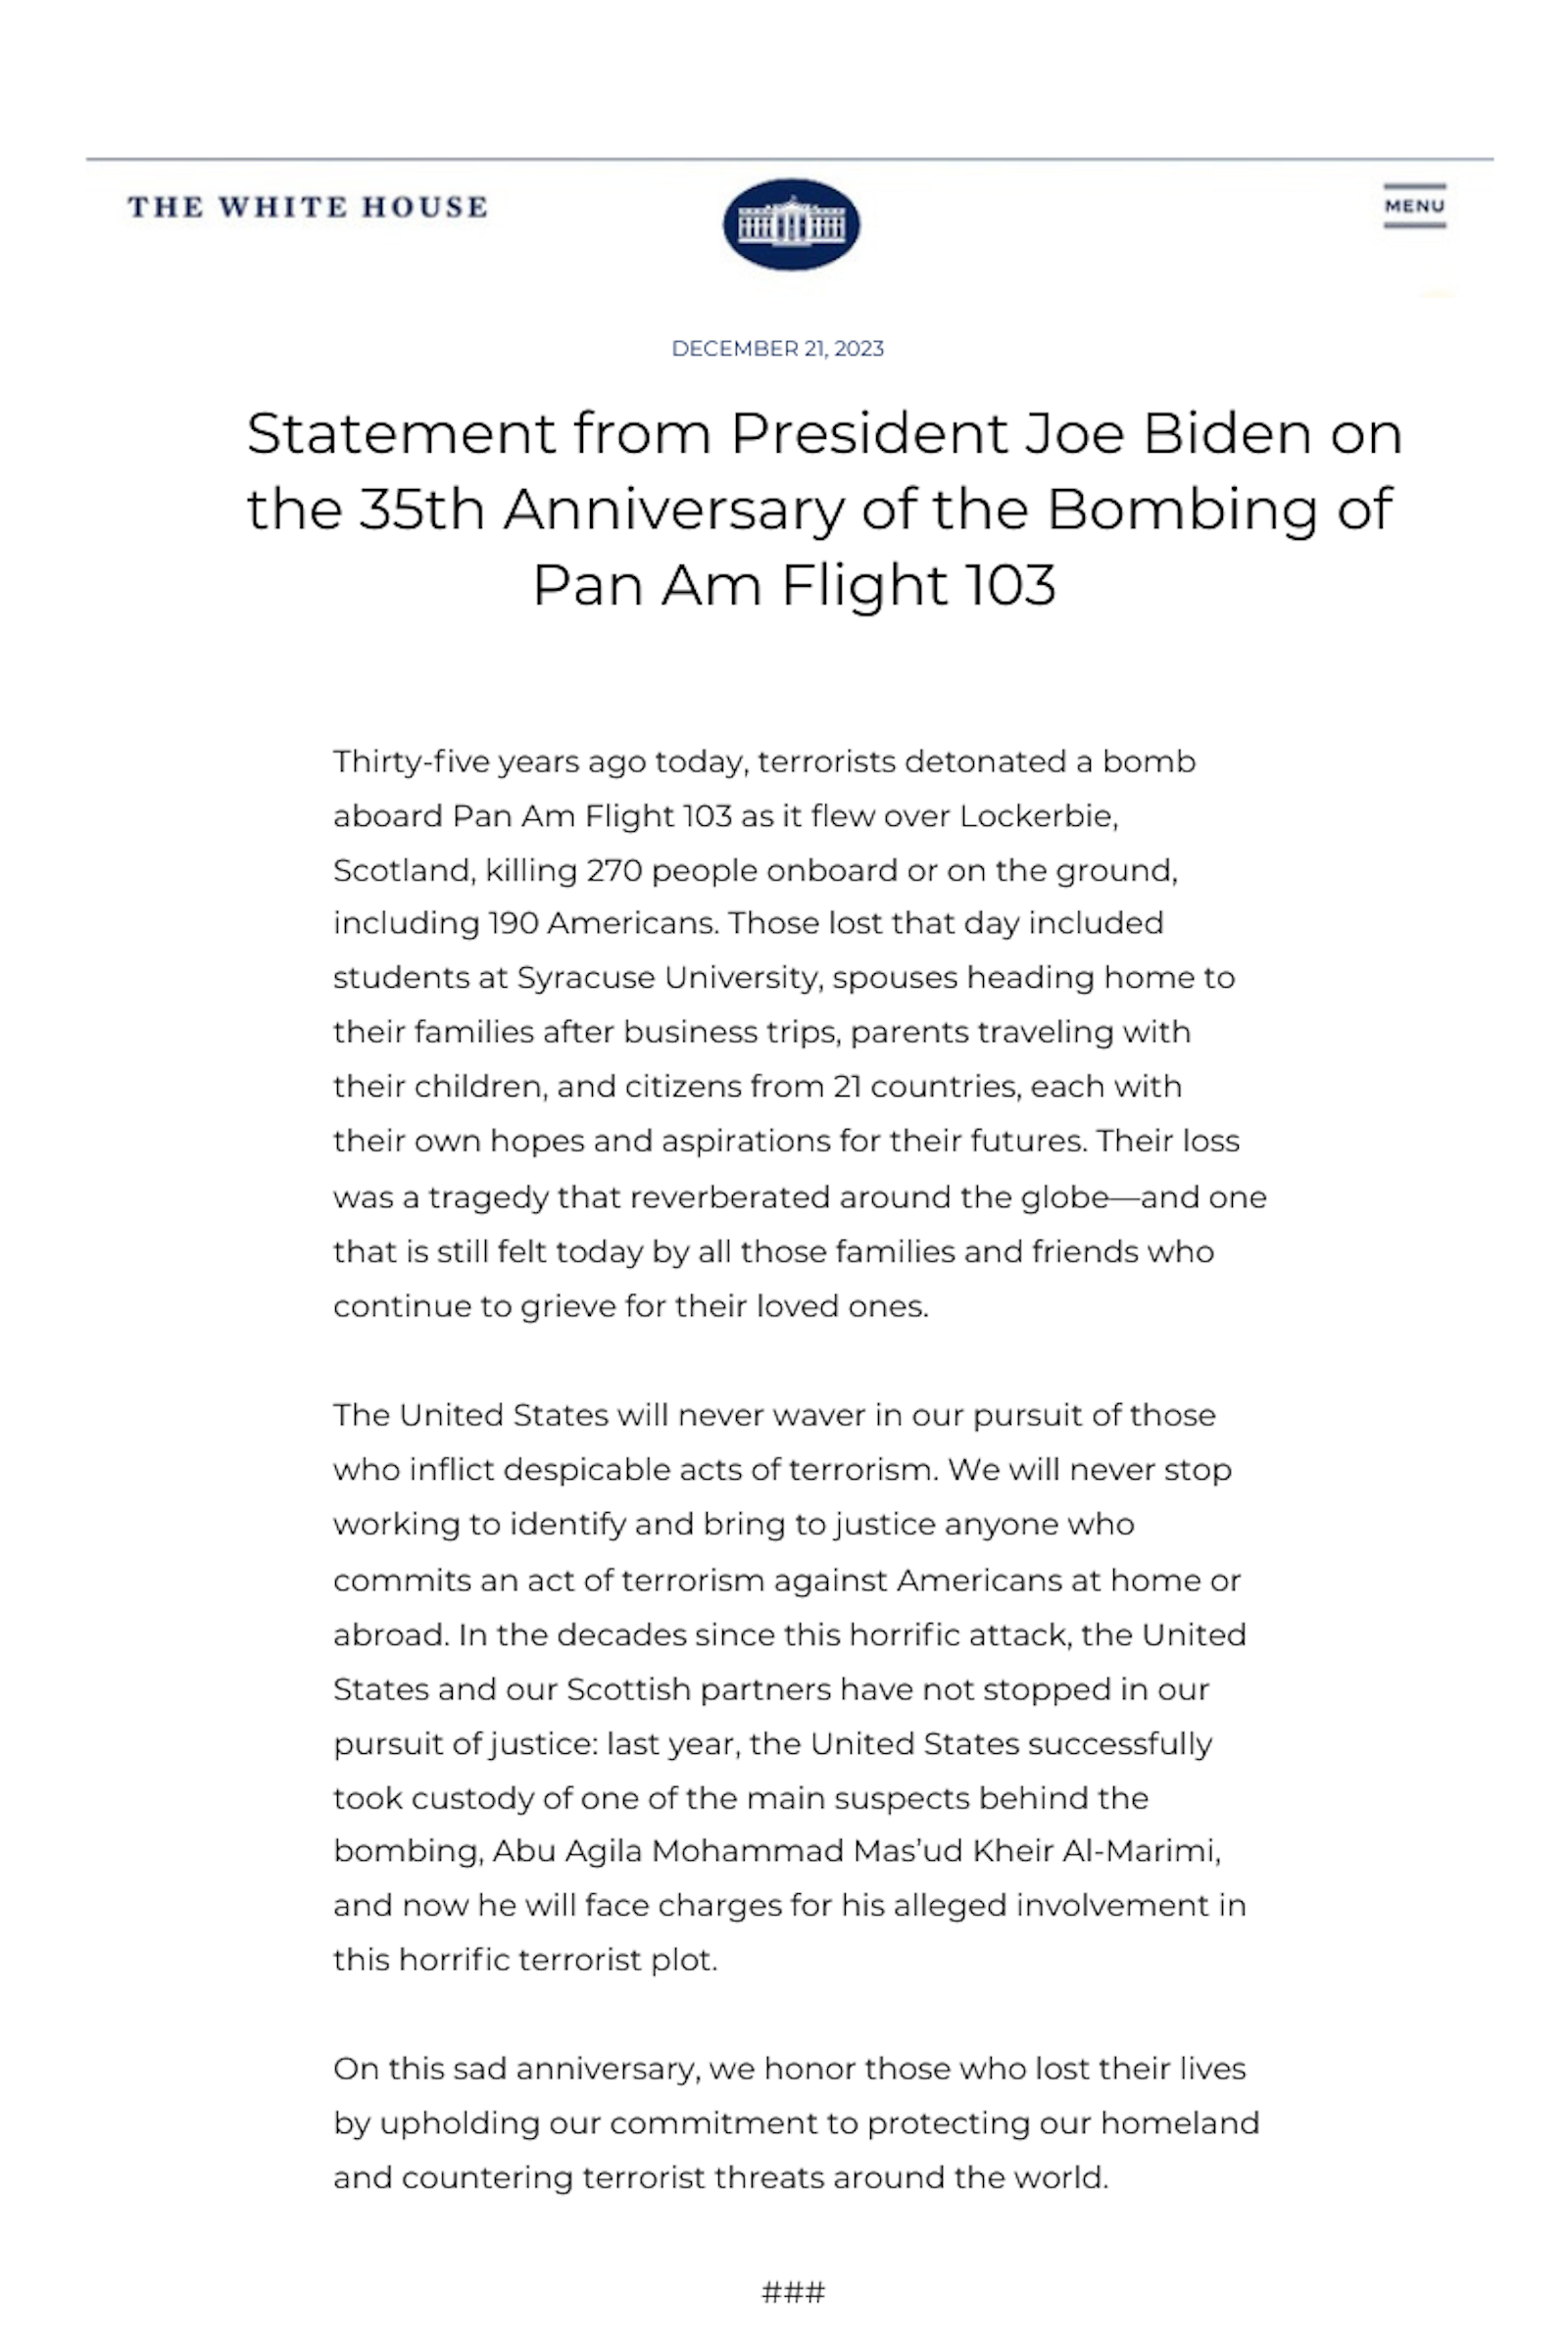 President Joe Biden's Statement on the 35th Anniversary of the Bombing of Pan Am Flight 103